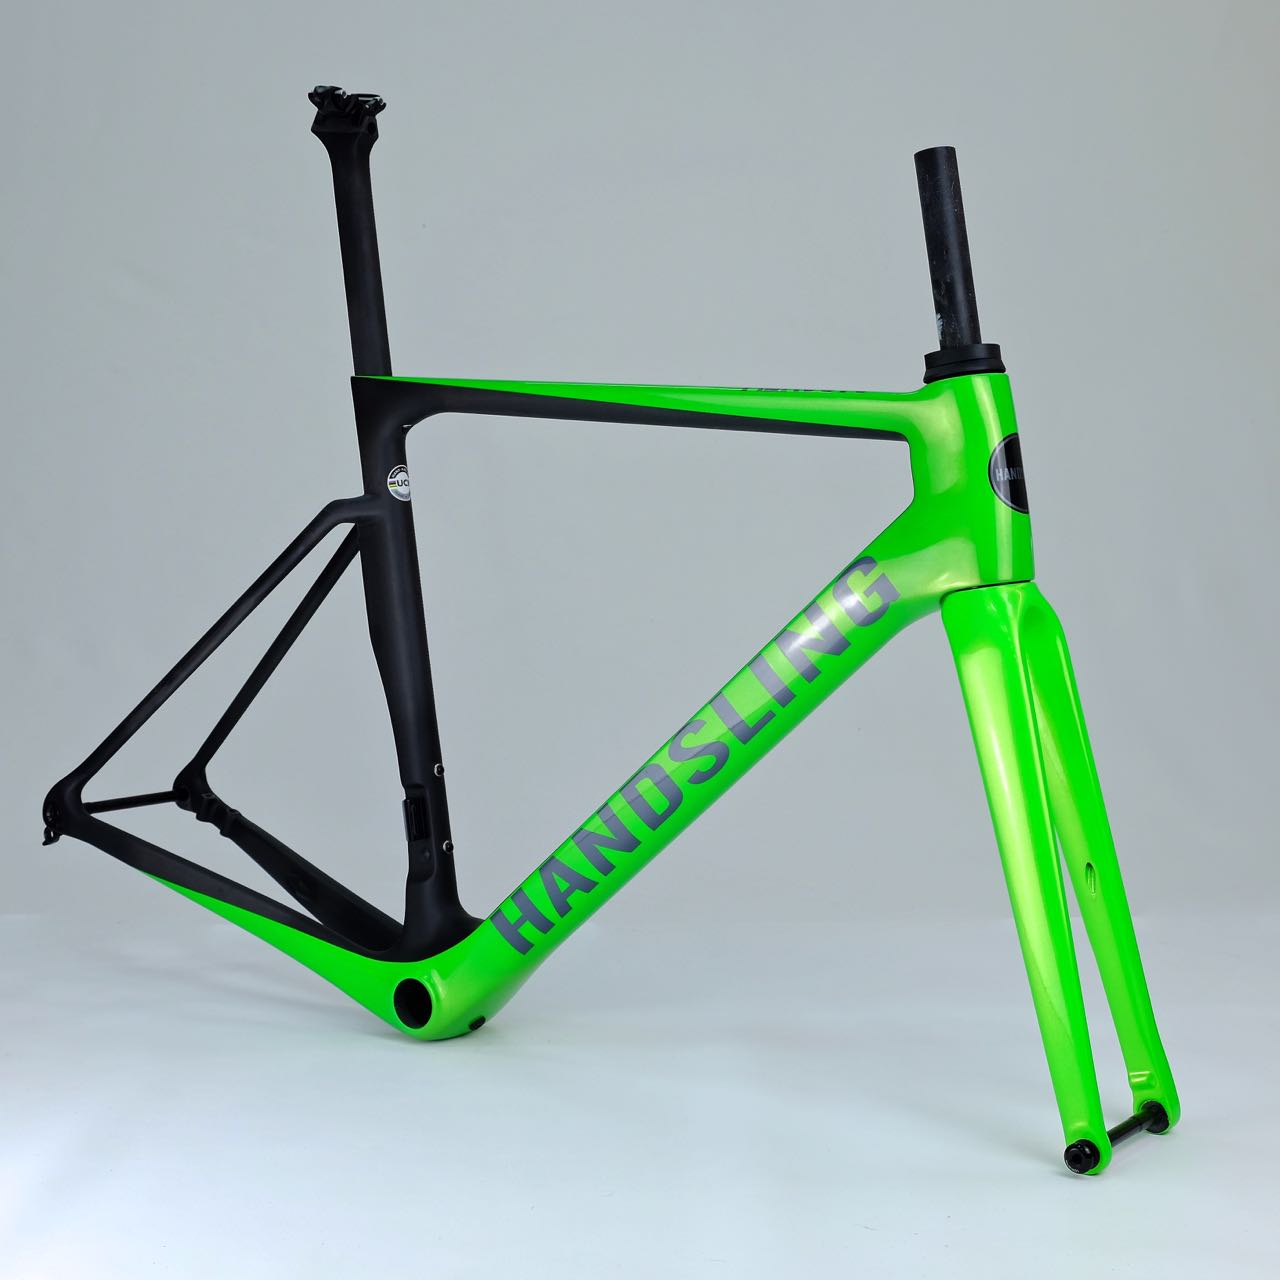 Handsling A1R0evo frame - Neon Green